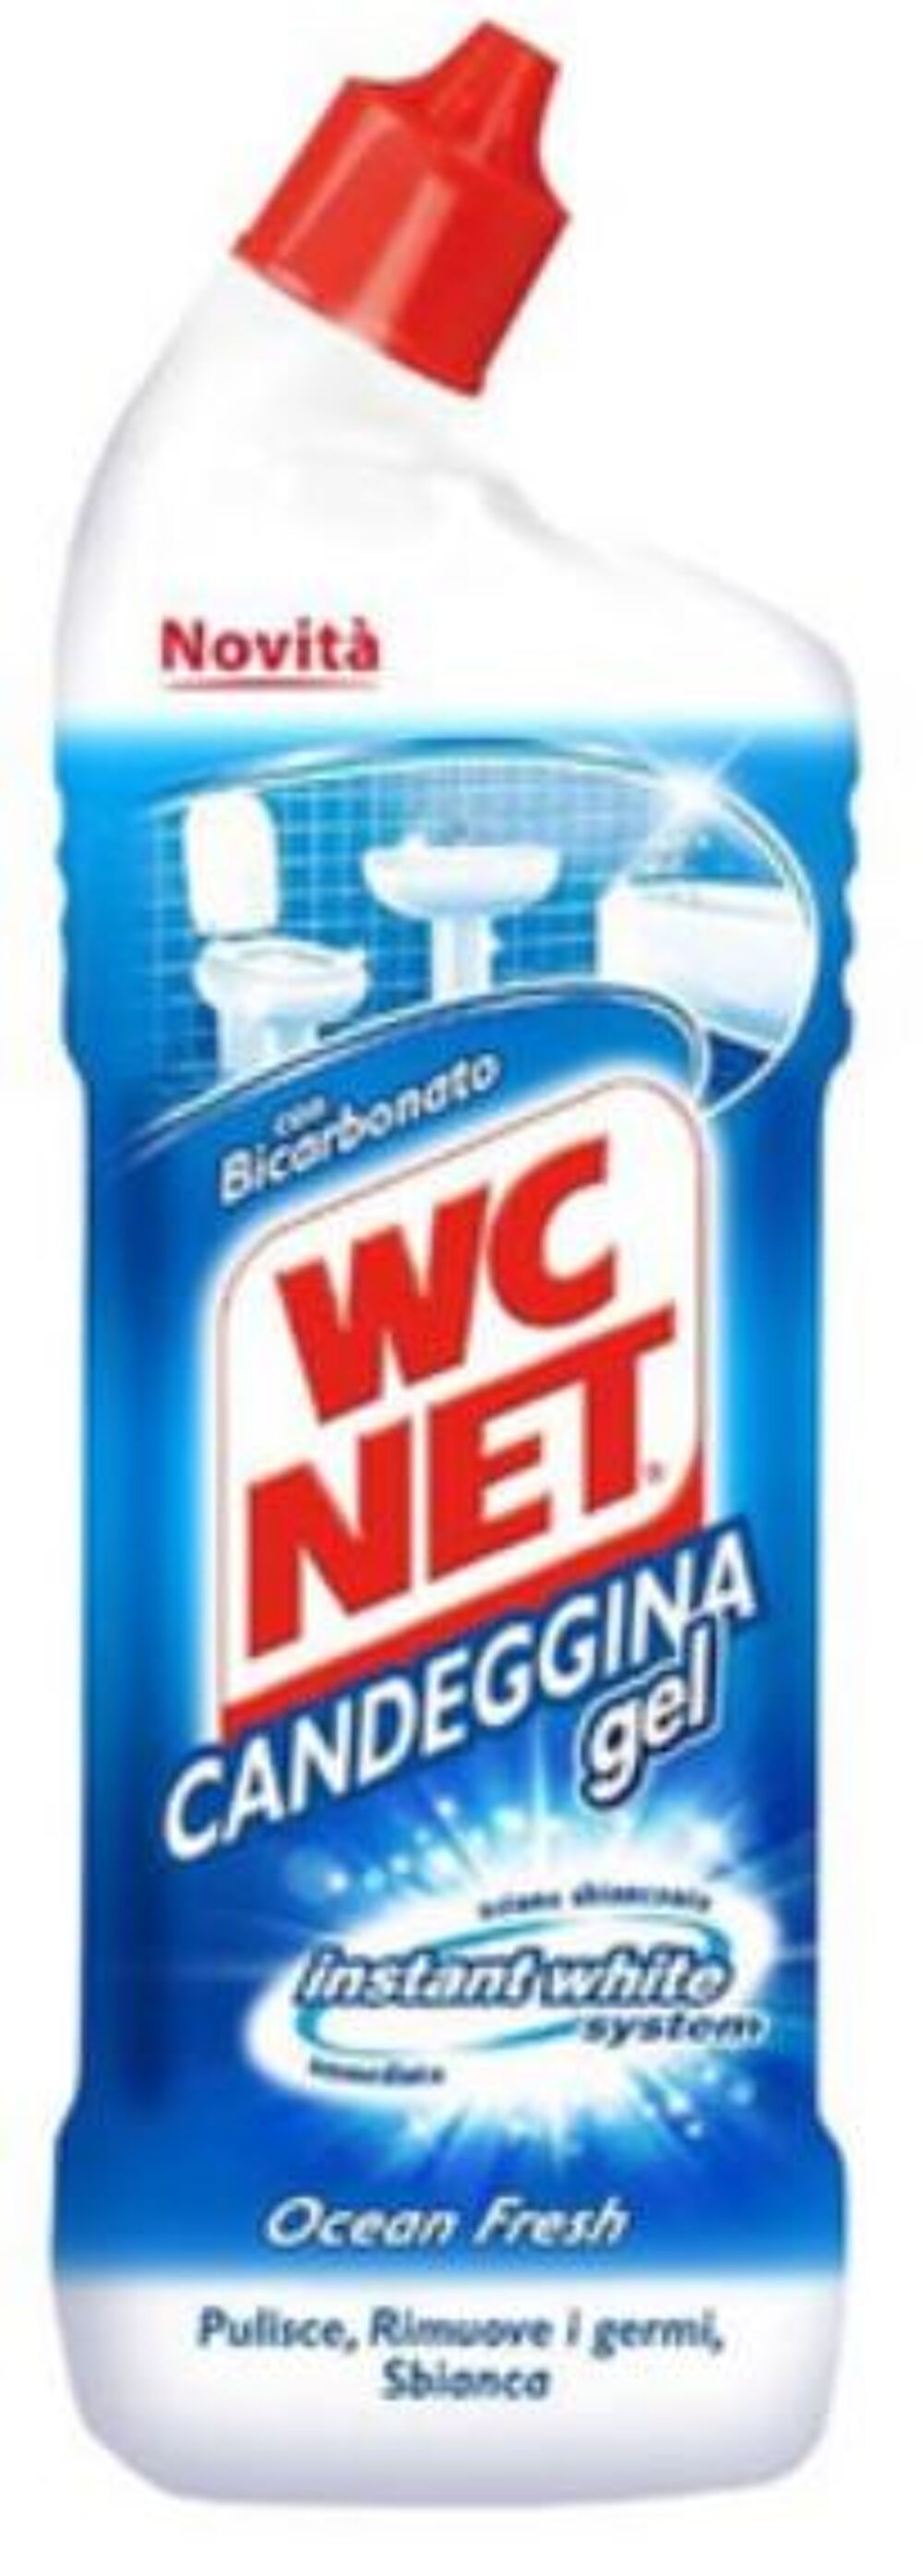 WC NET CANDEGGINA GEL WHITE 700ML - Bricocenter